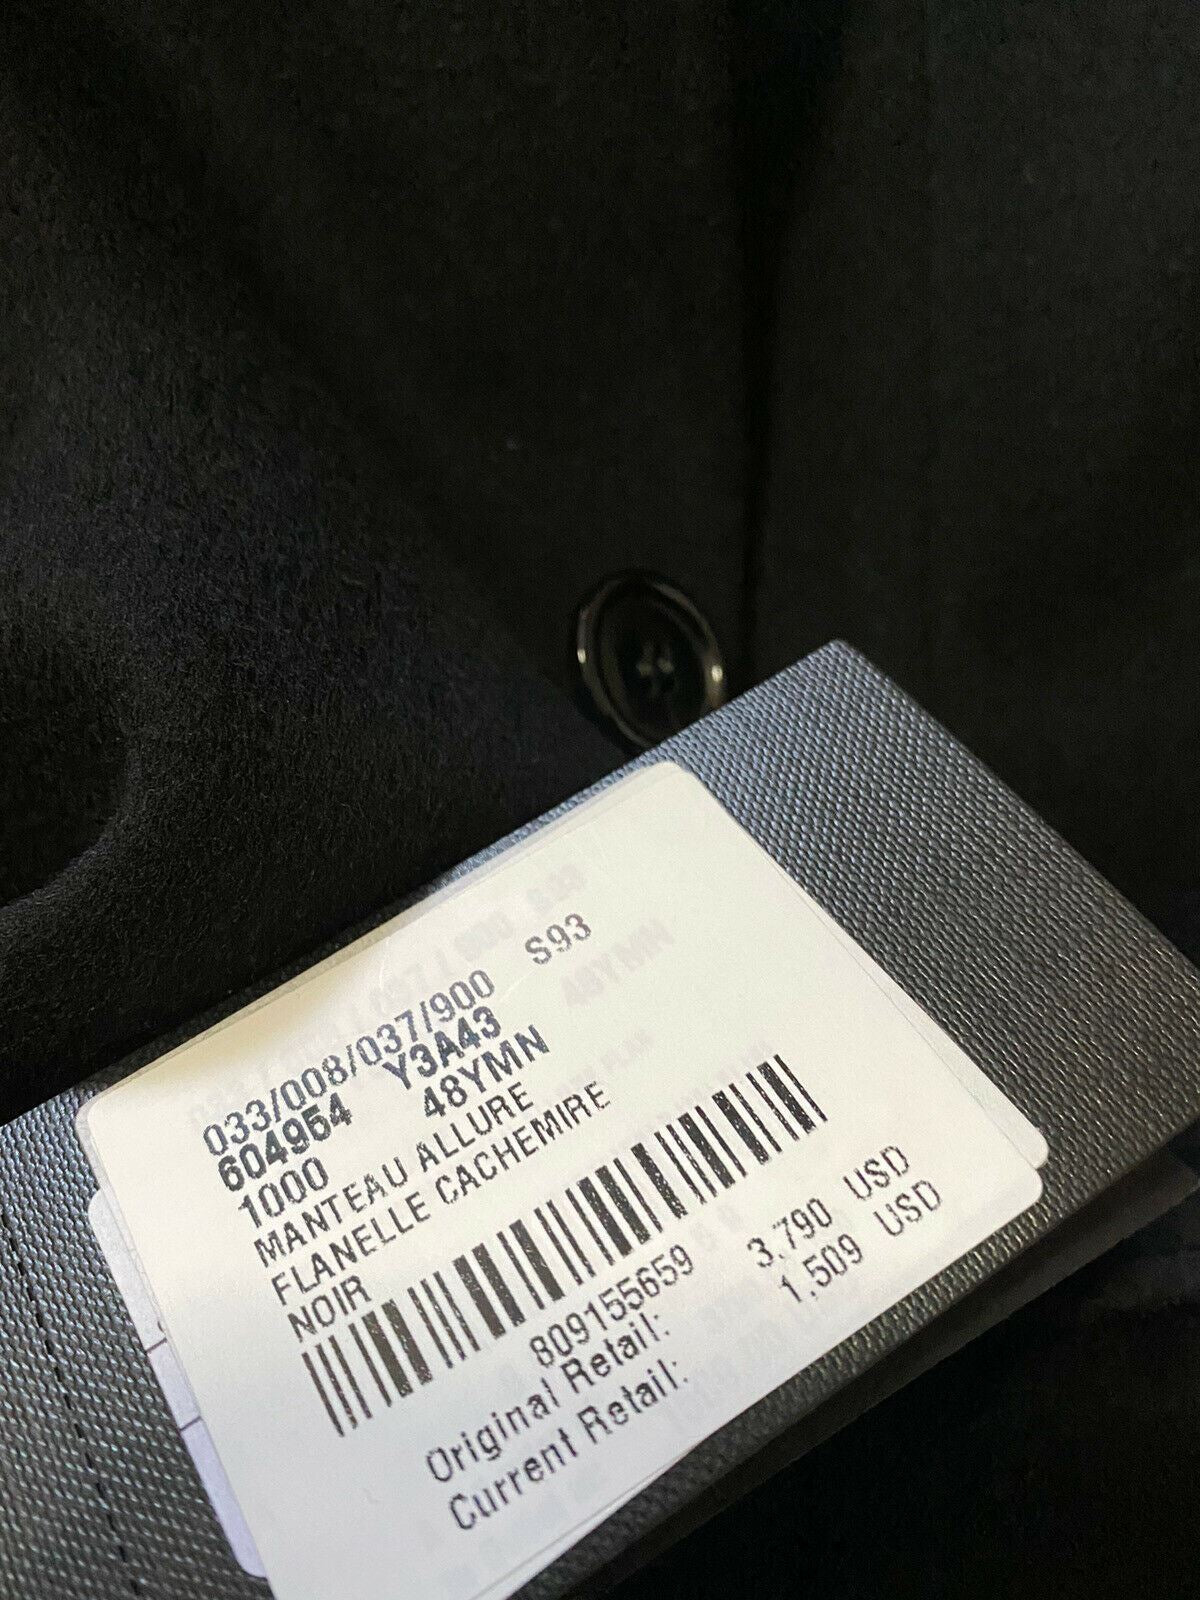 New $3790 Saint Laurent Men Wool/Cashmere Overcoat Coat Black 38 US/48 Eu Italy